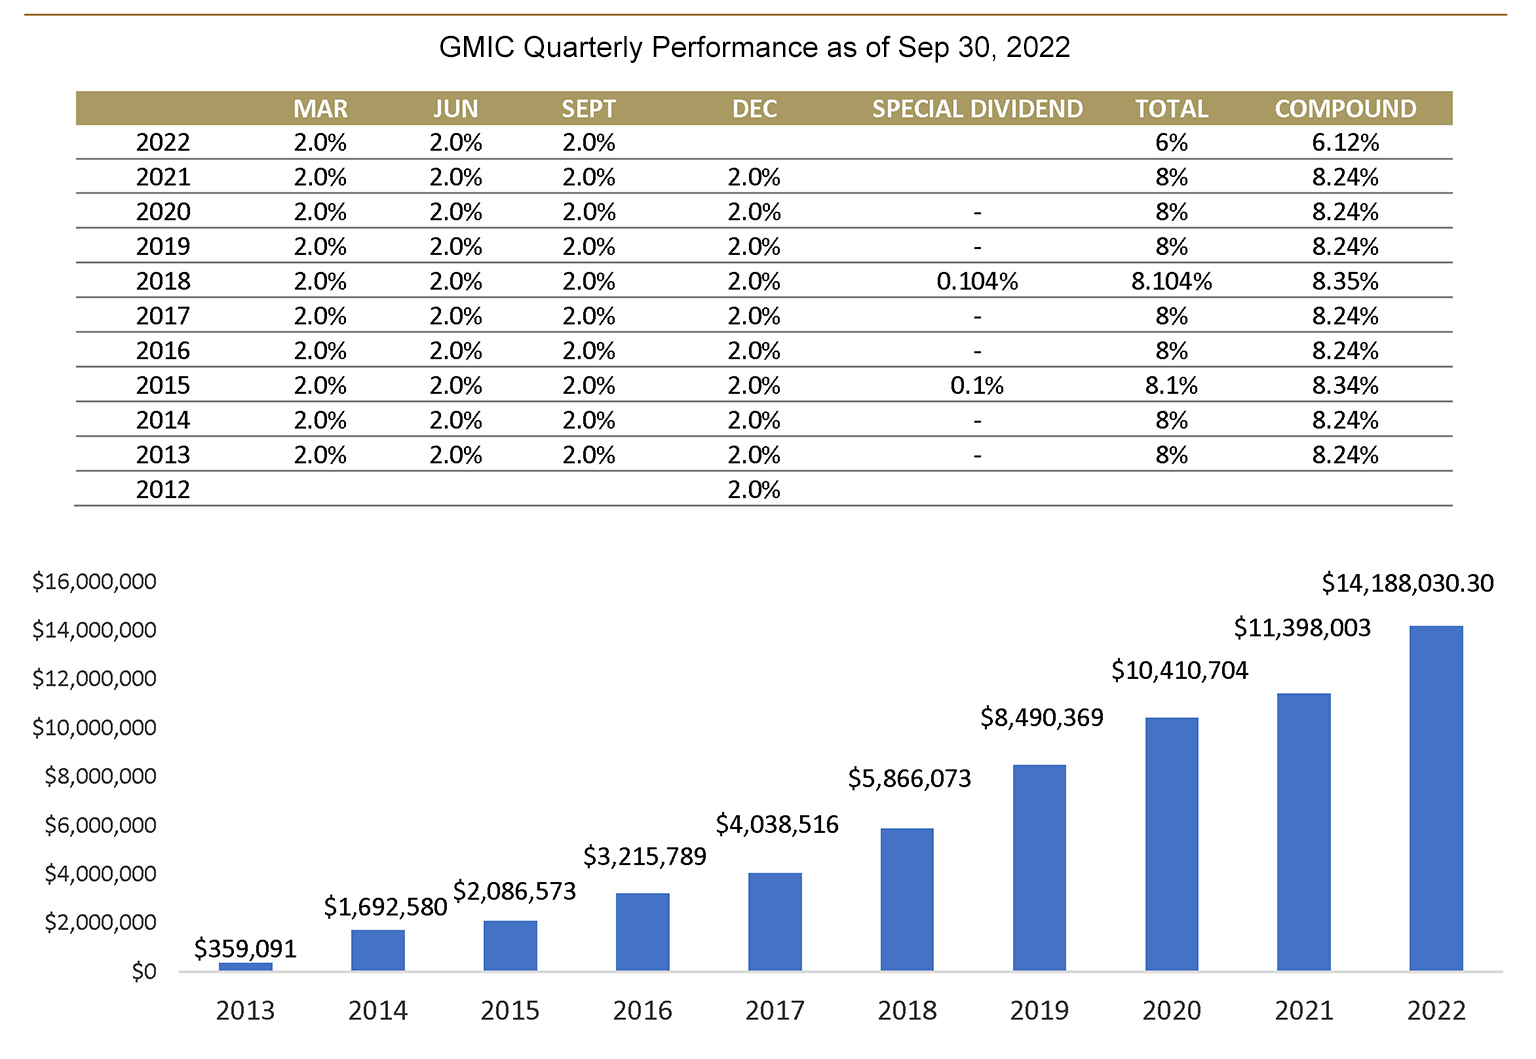 Gentai Capital Corporation | GMIC Quarterly Performance